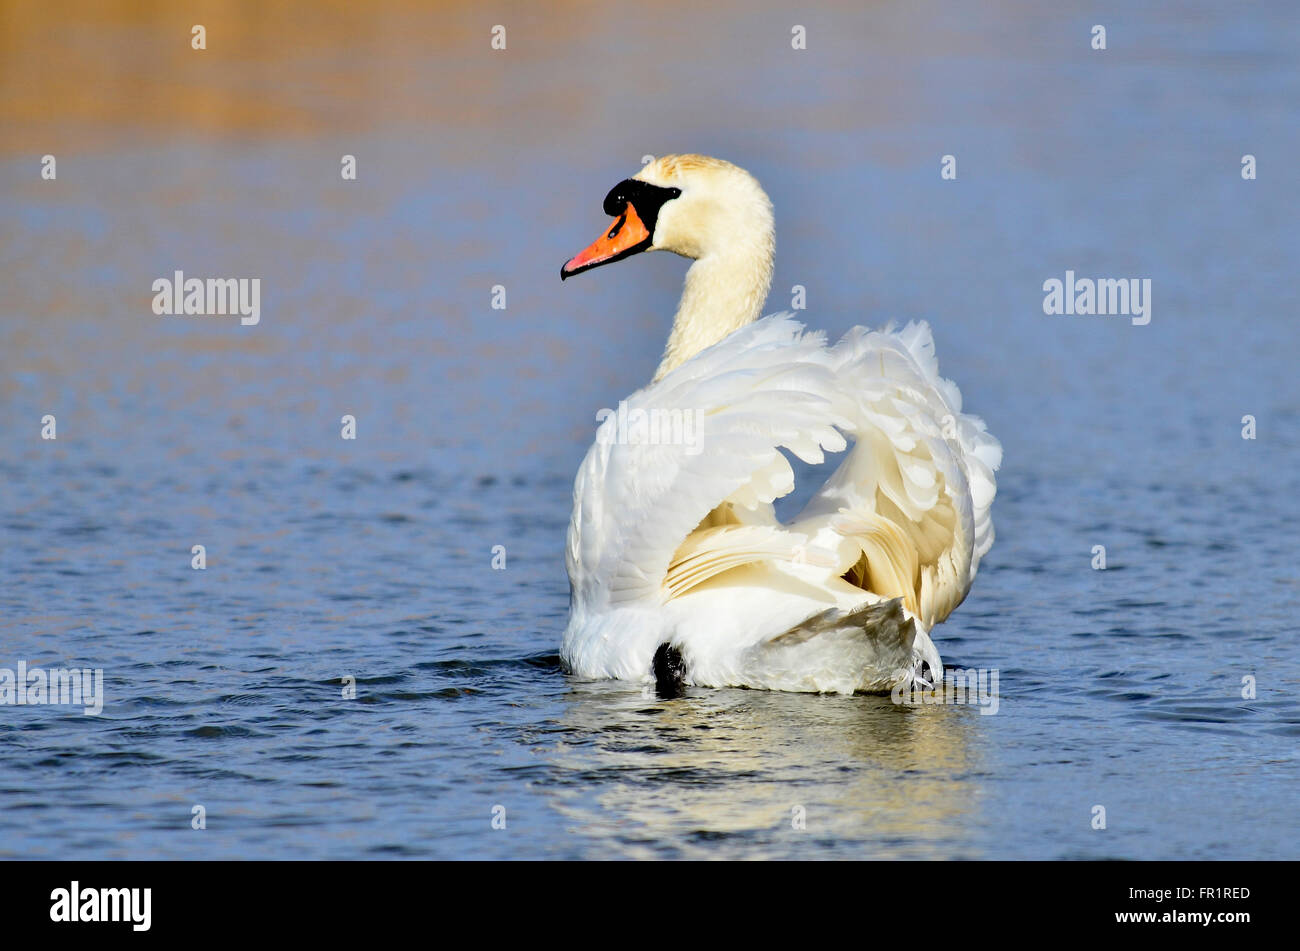 A mute swan swimming on calm water UK Stock Photo